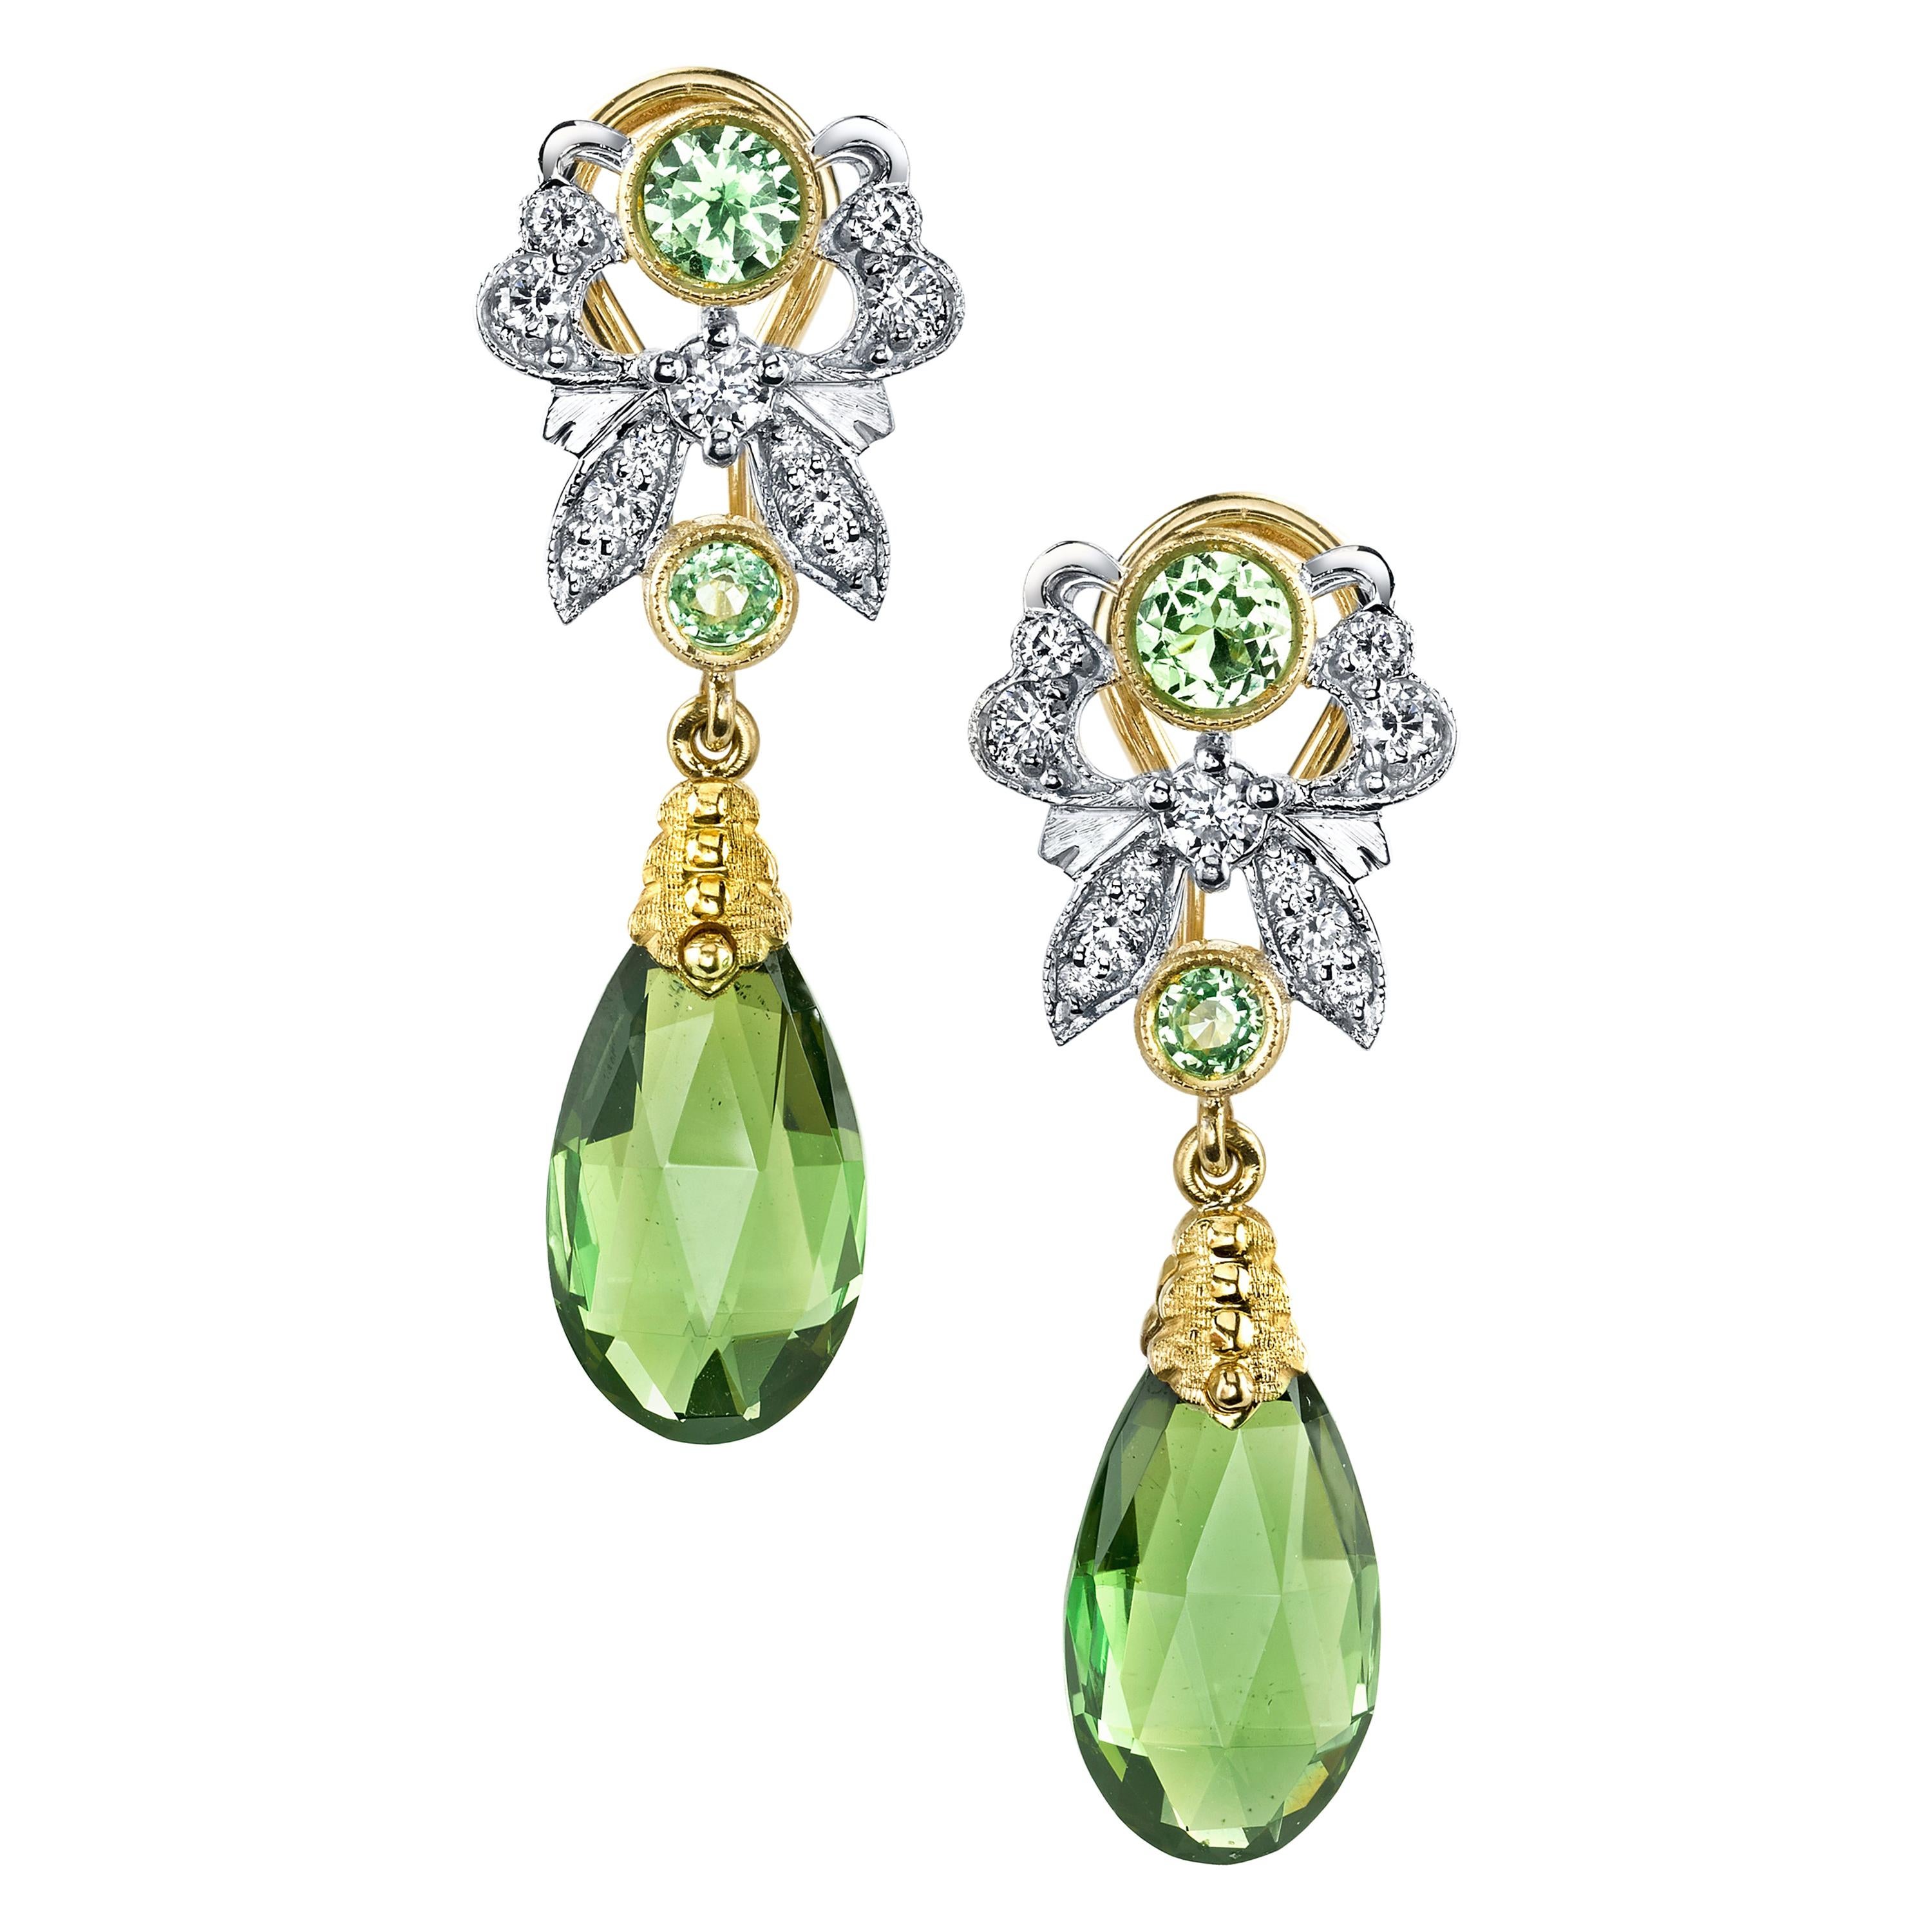 Green Tourmaline, Tsavorite Garnet, Diamond, Yellow, White Gold Dangle Earrings